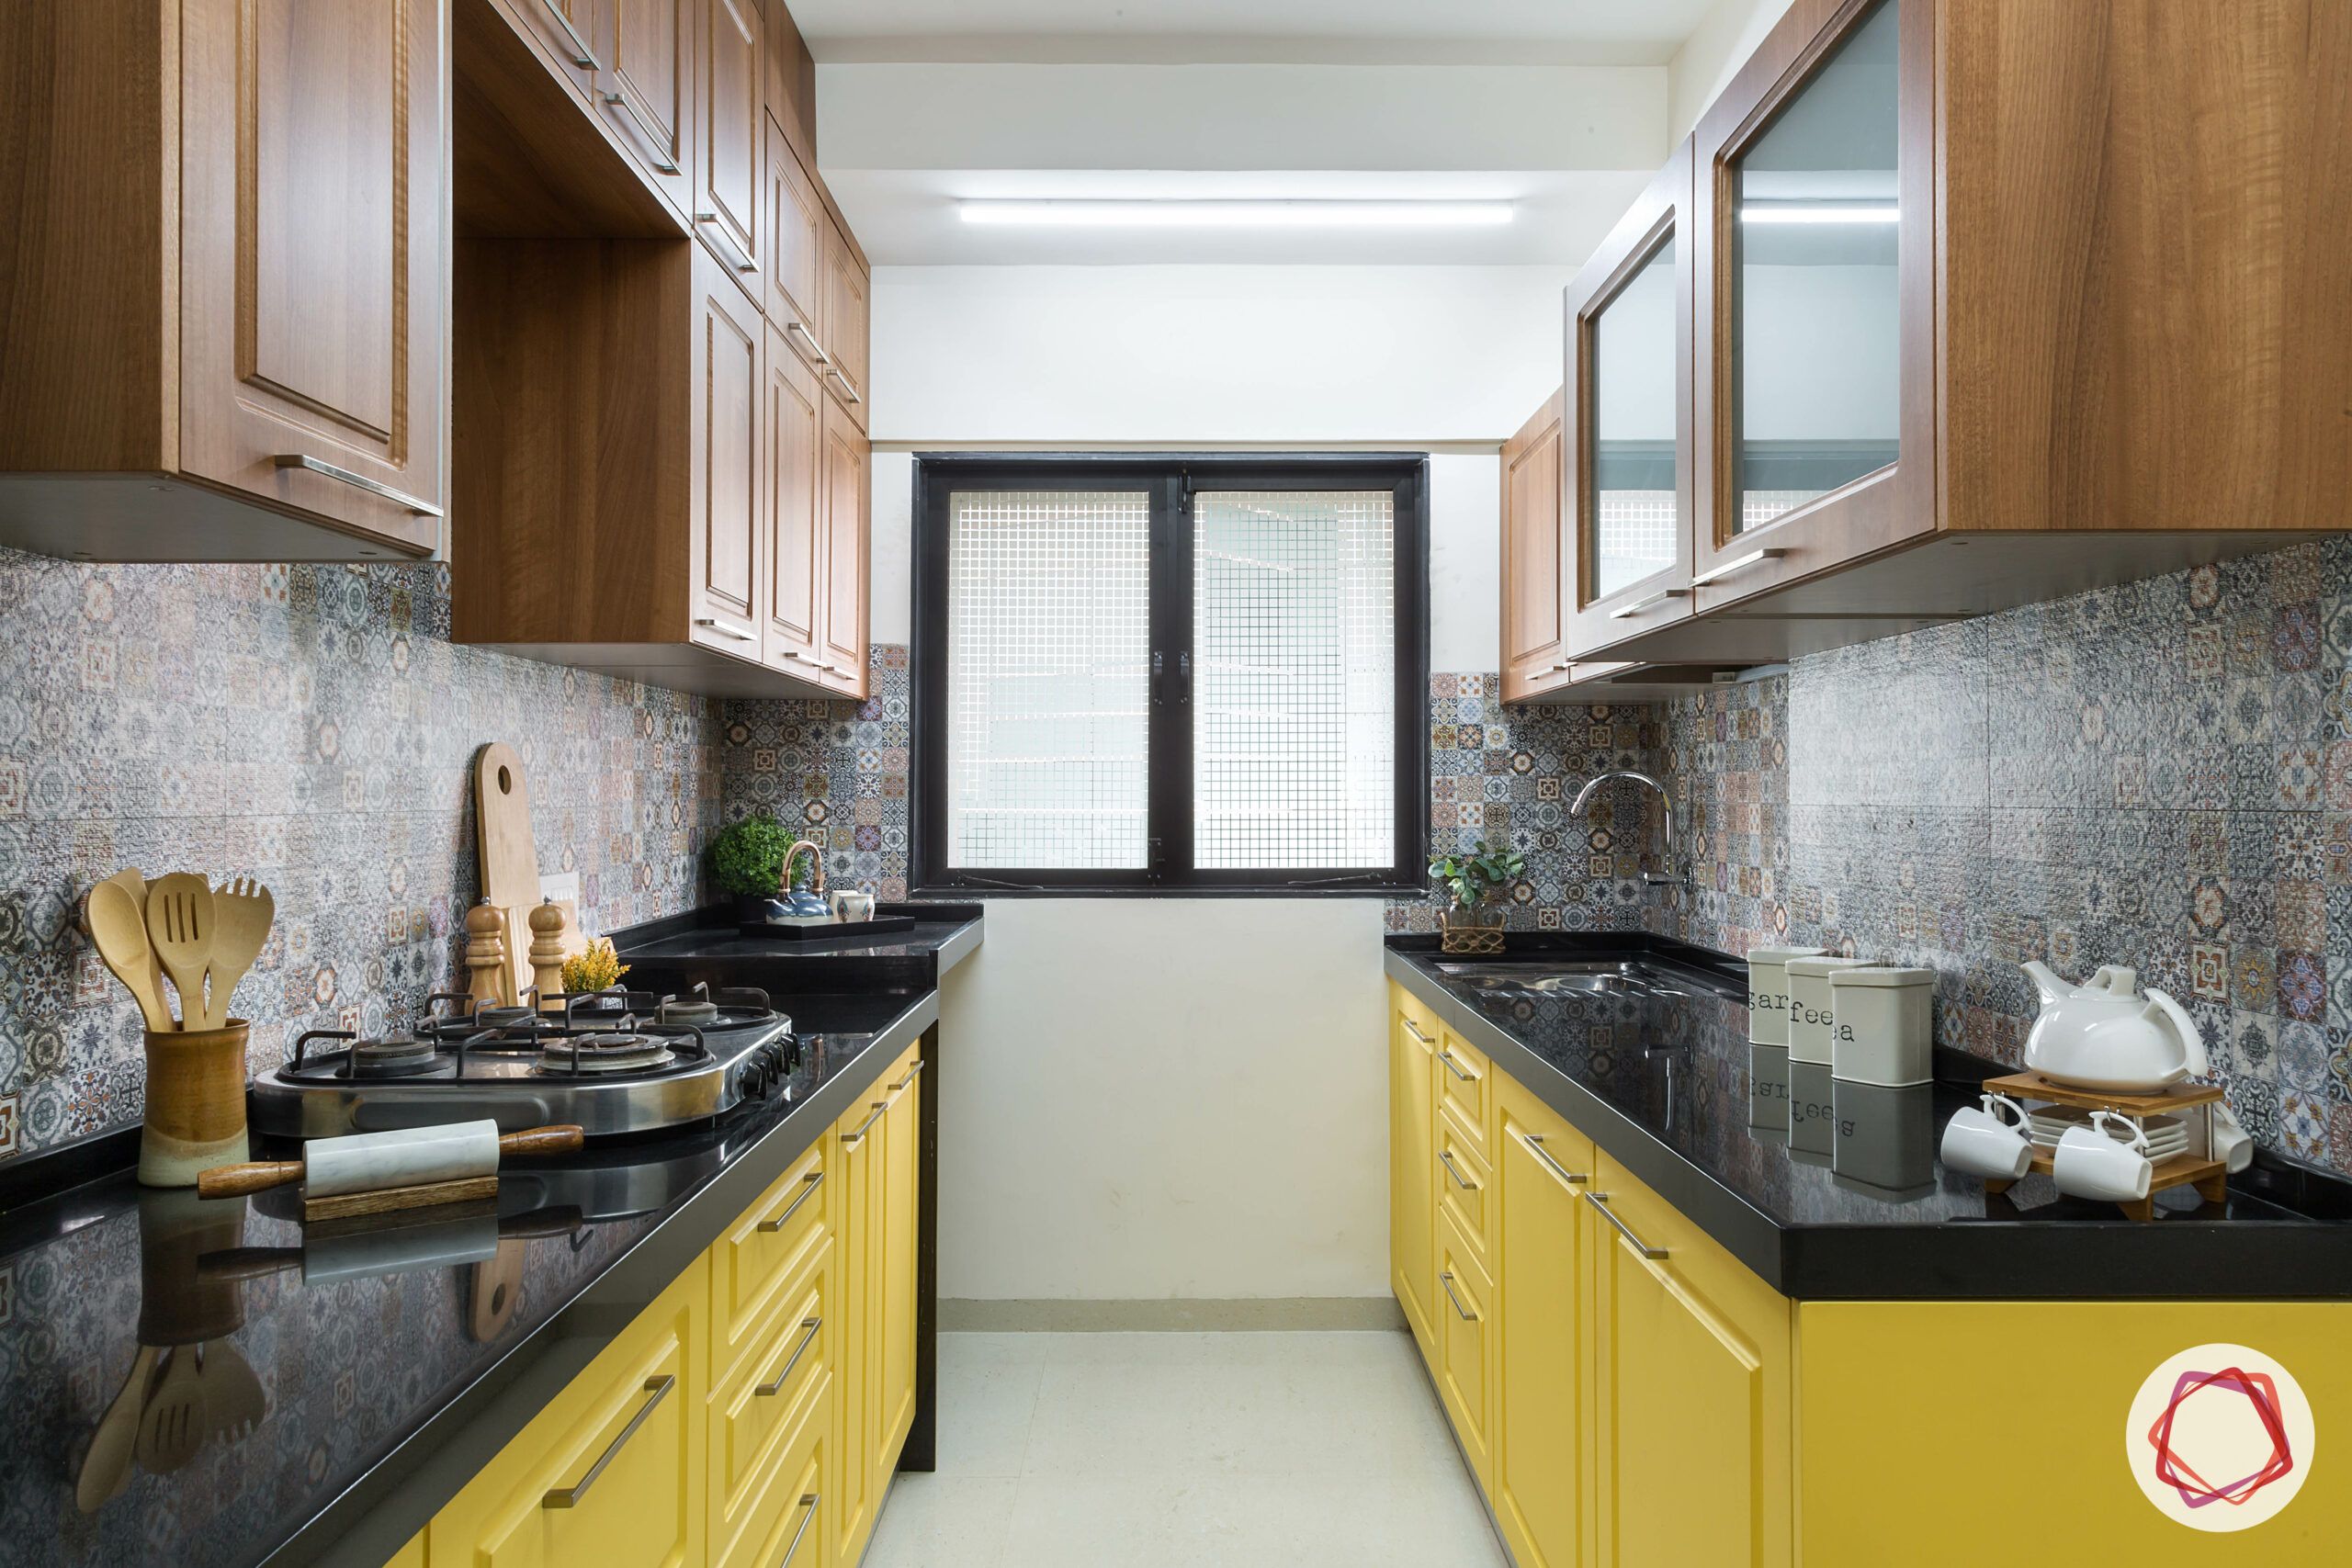 yellow kitchen-moroccan tiles backsplash